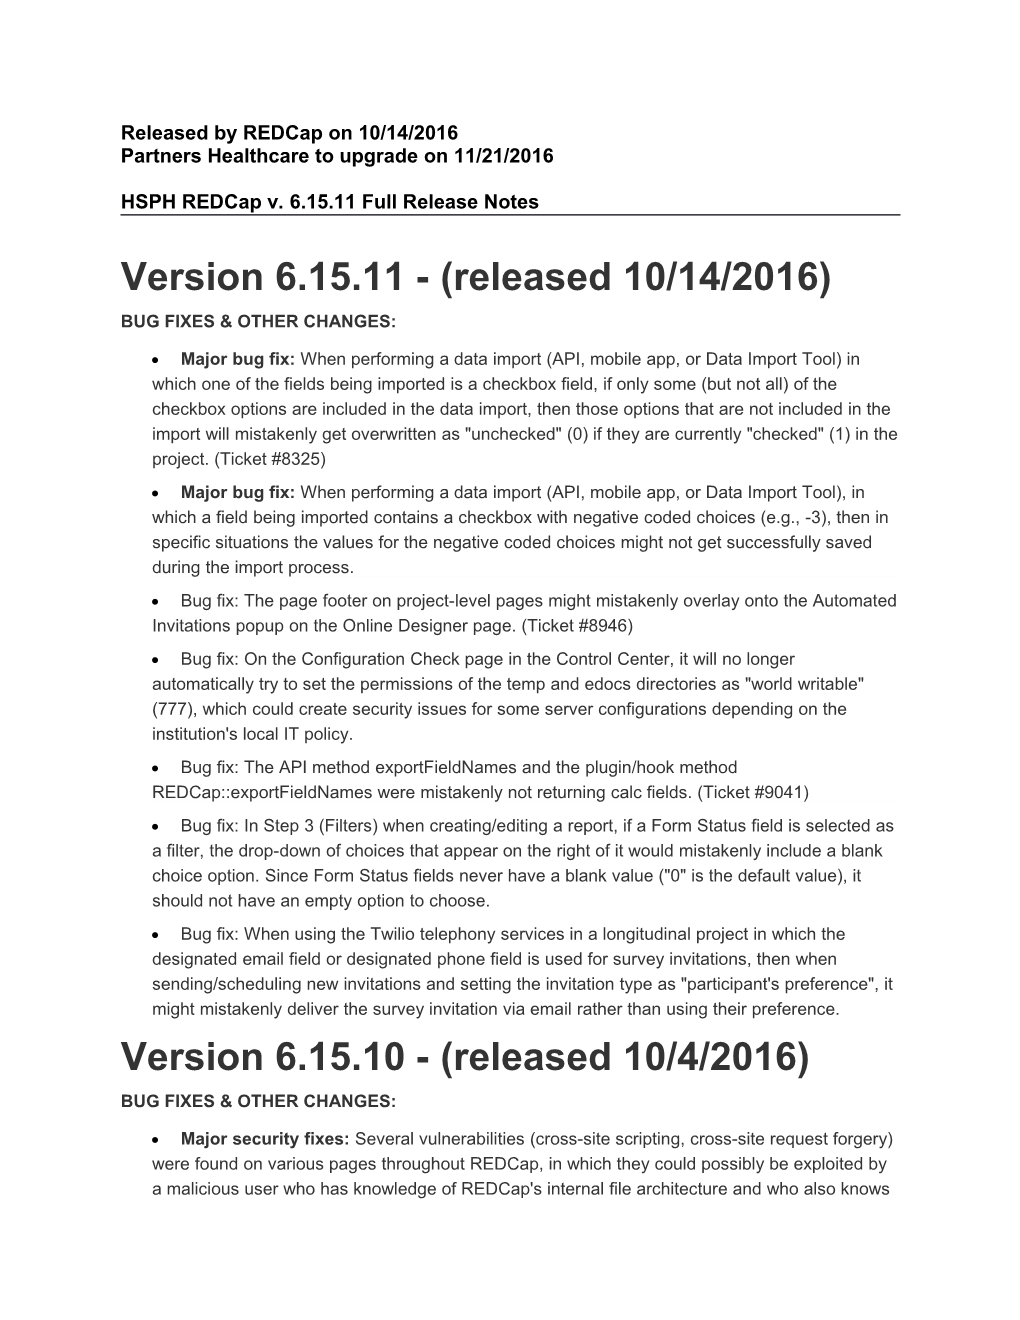 HSPH Redcap V. 6.15.11 Full Release Notes